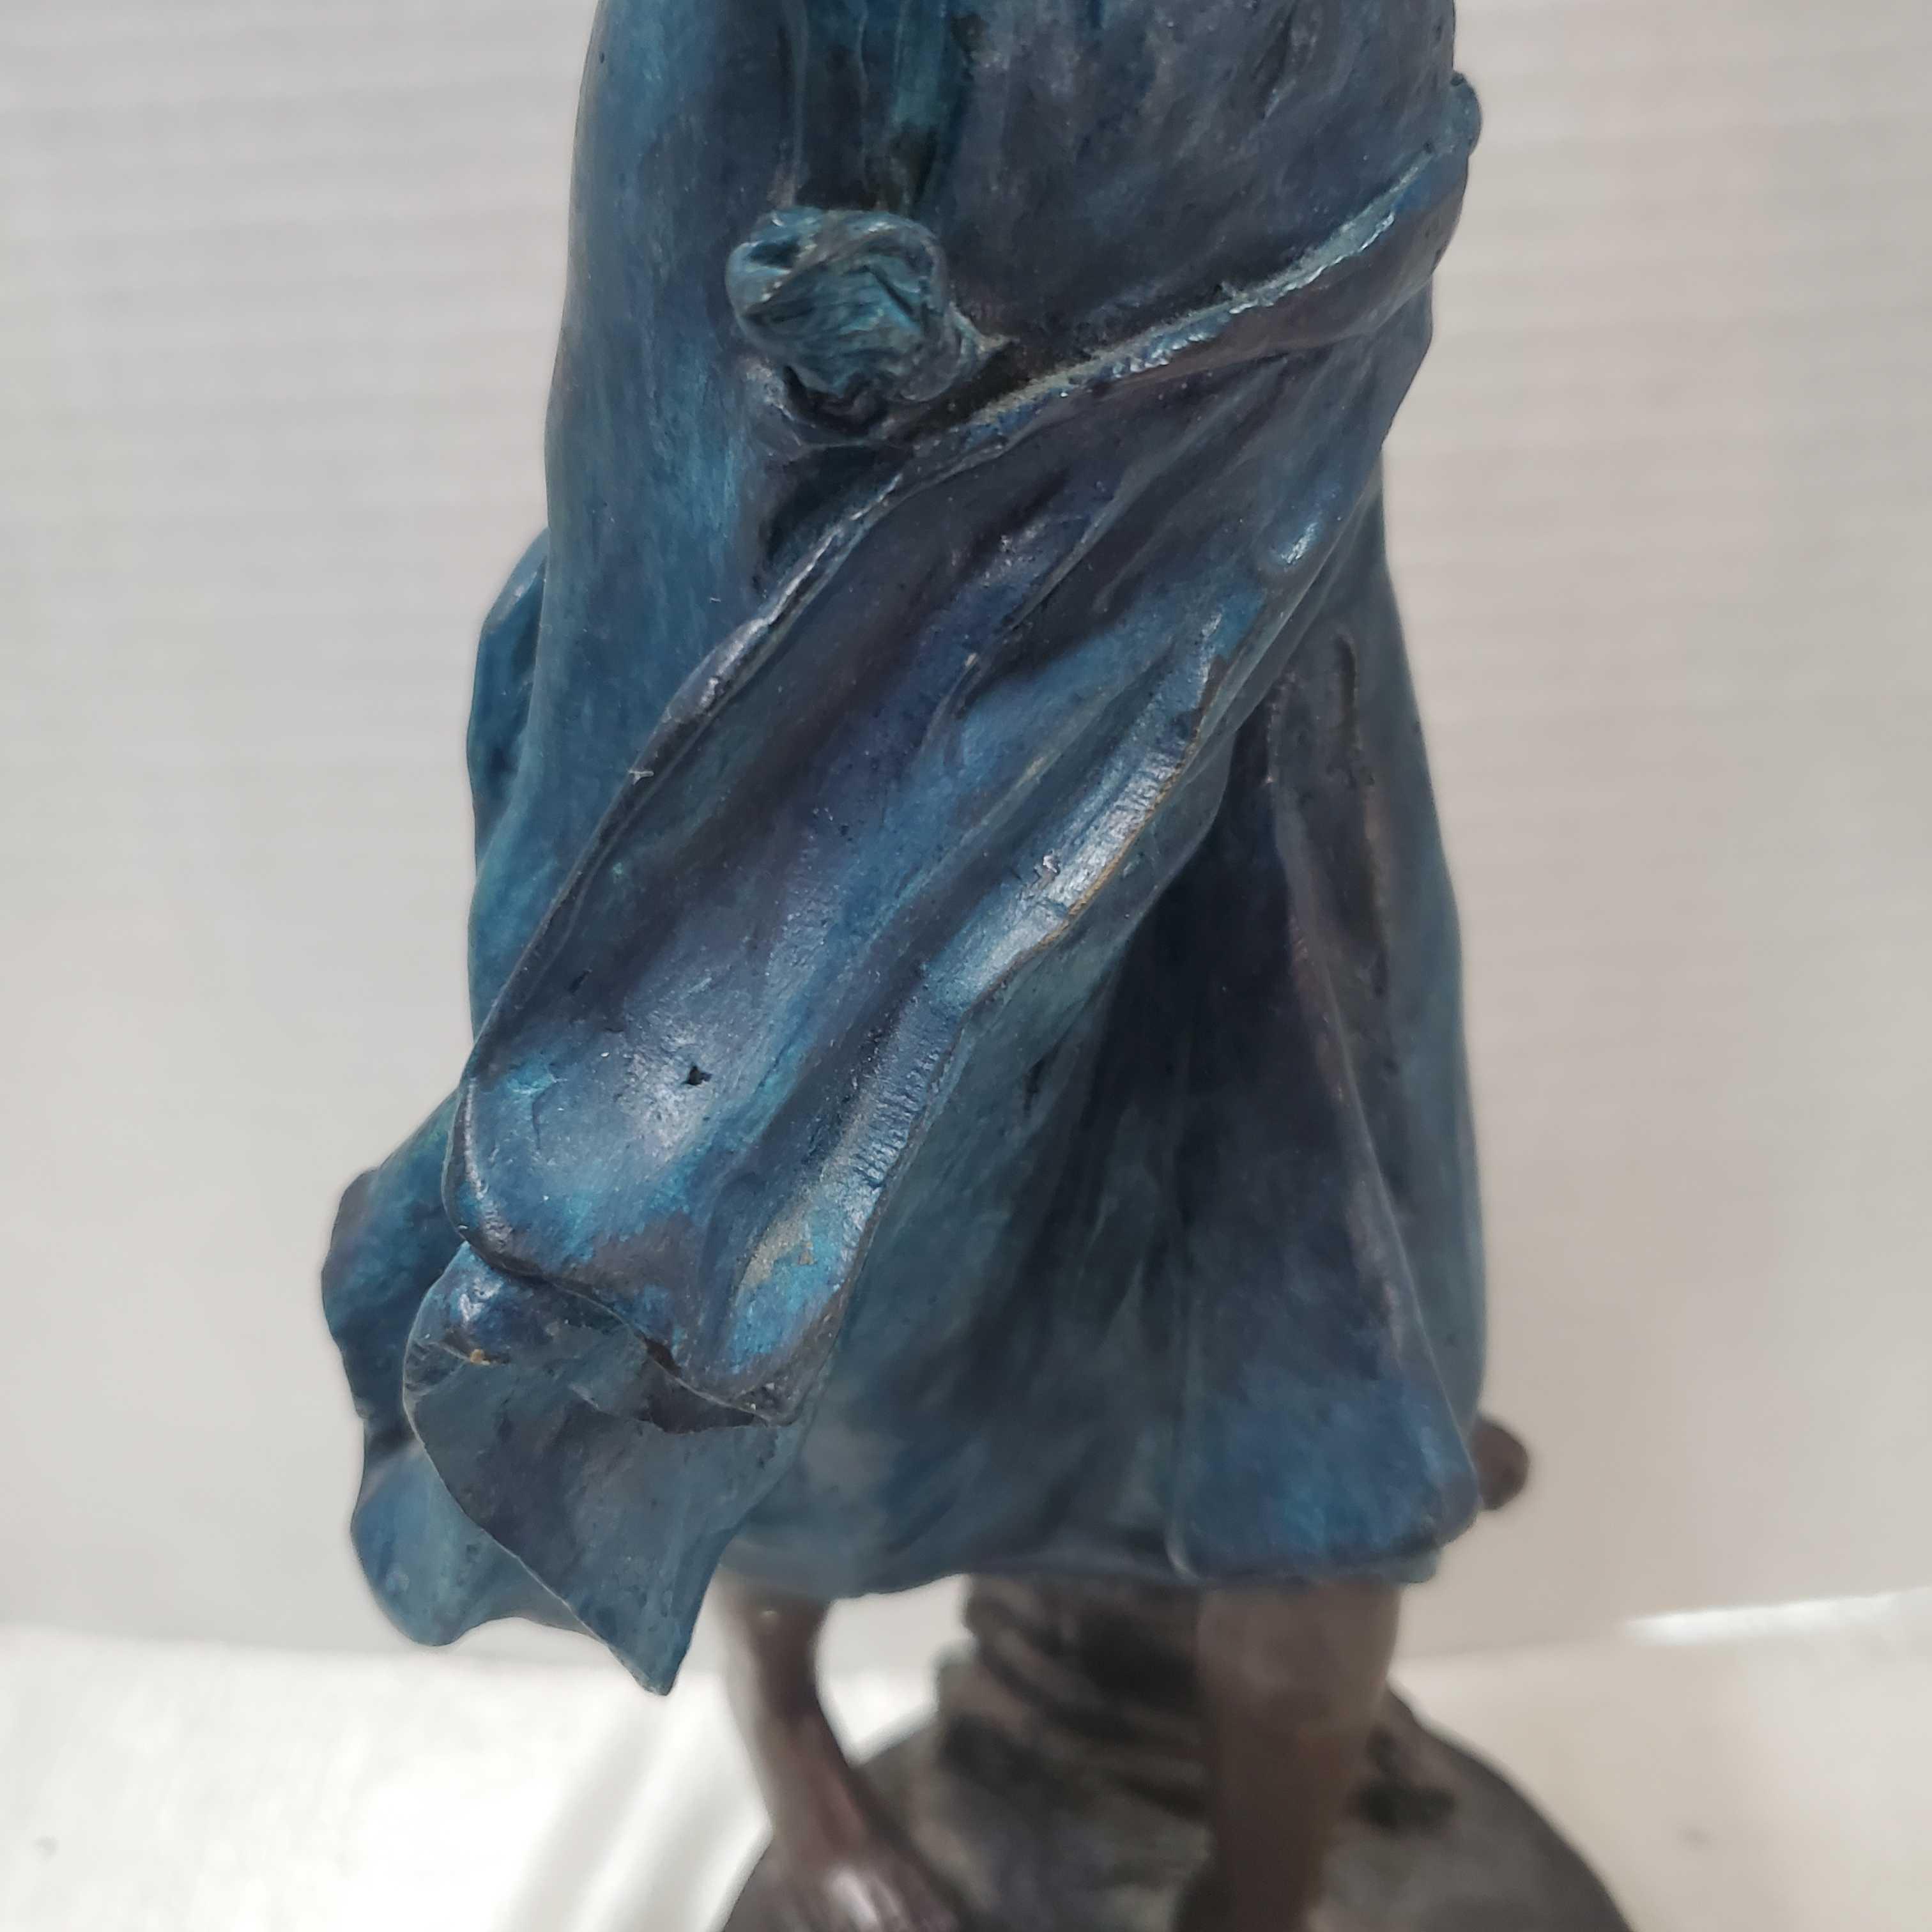 2 Vintage Bronze Sculptures Of Female Figures By Lake Geneva Studios